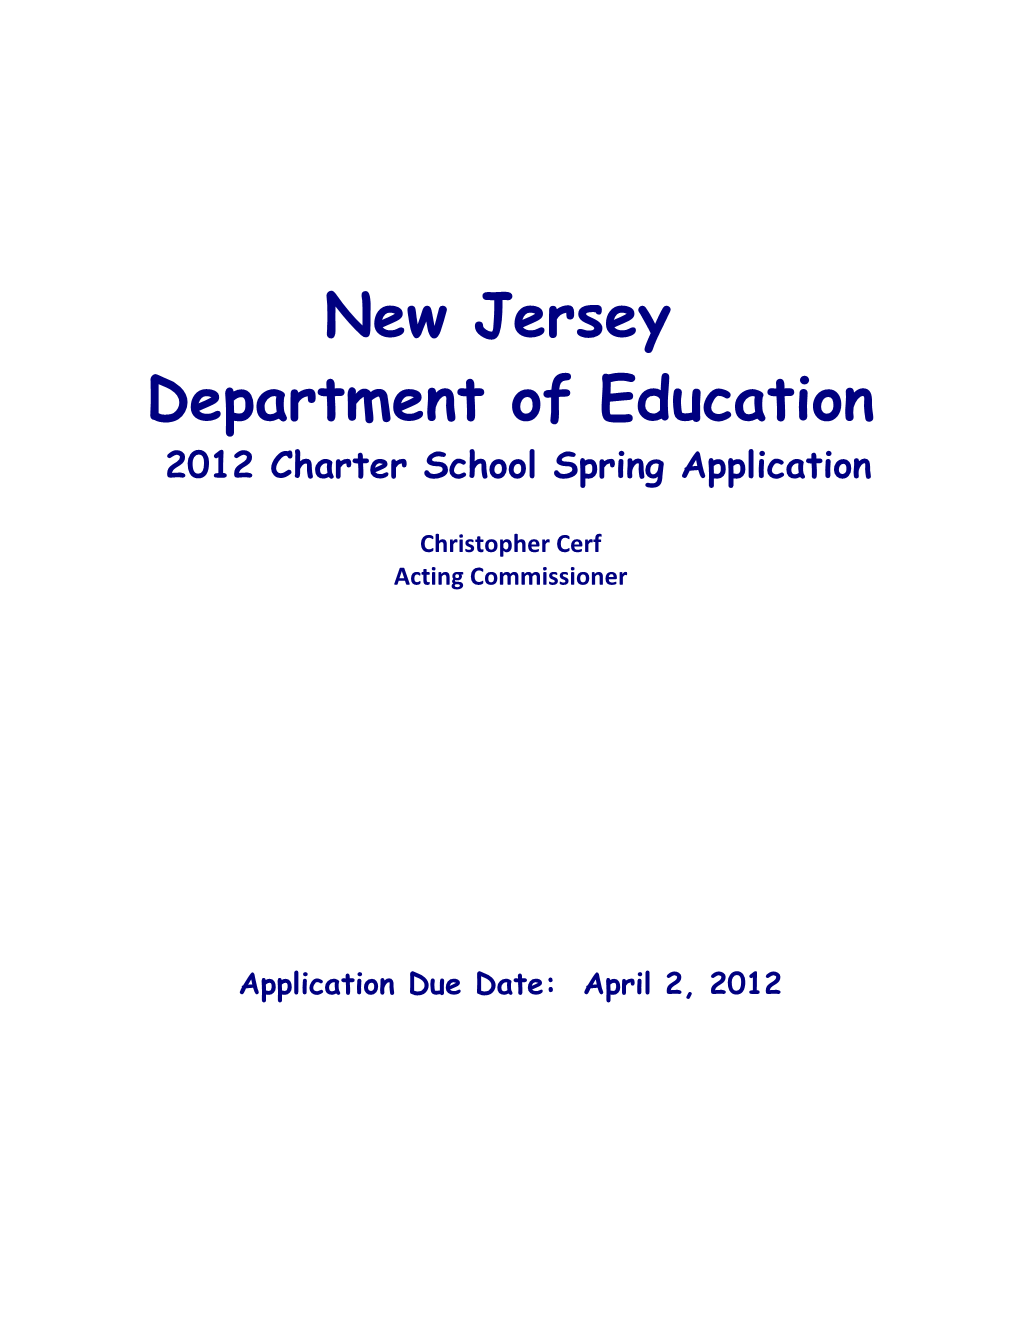 New Jersey Charter School Application